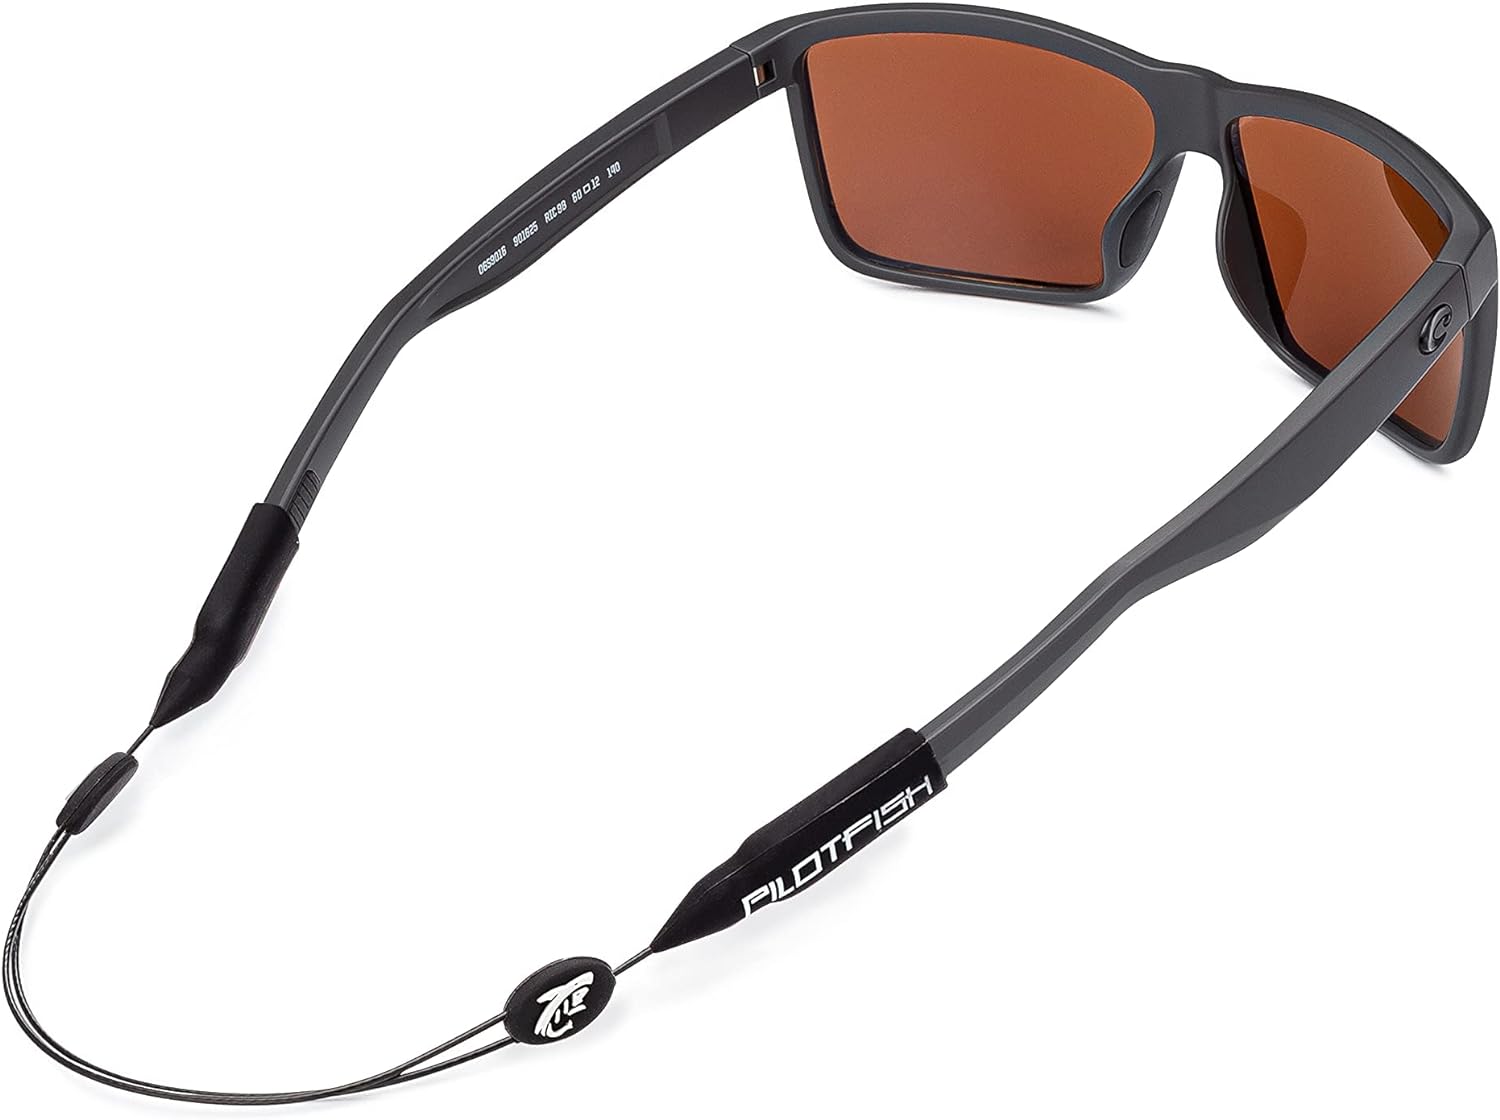 Generic Pilotfish No Tail Adjustable Eyewear Retainer Cable Strap: Sunglasses, Eyeglasses, Glasses (16 Inch, The Original)